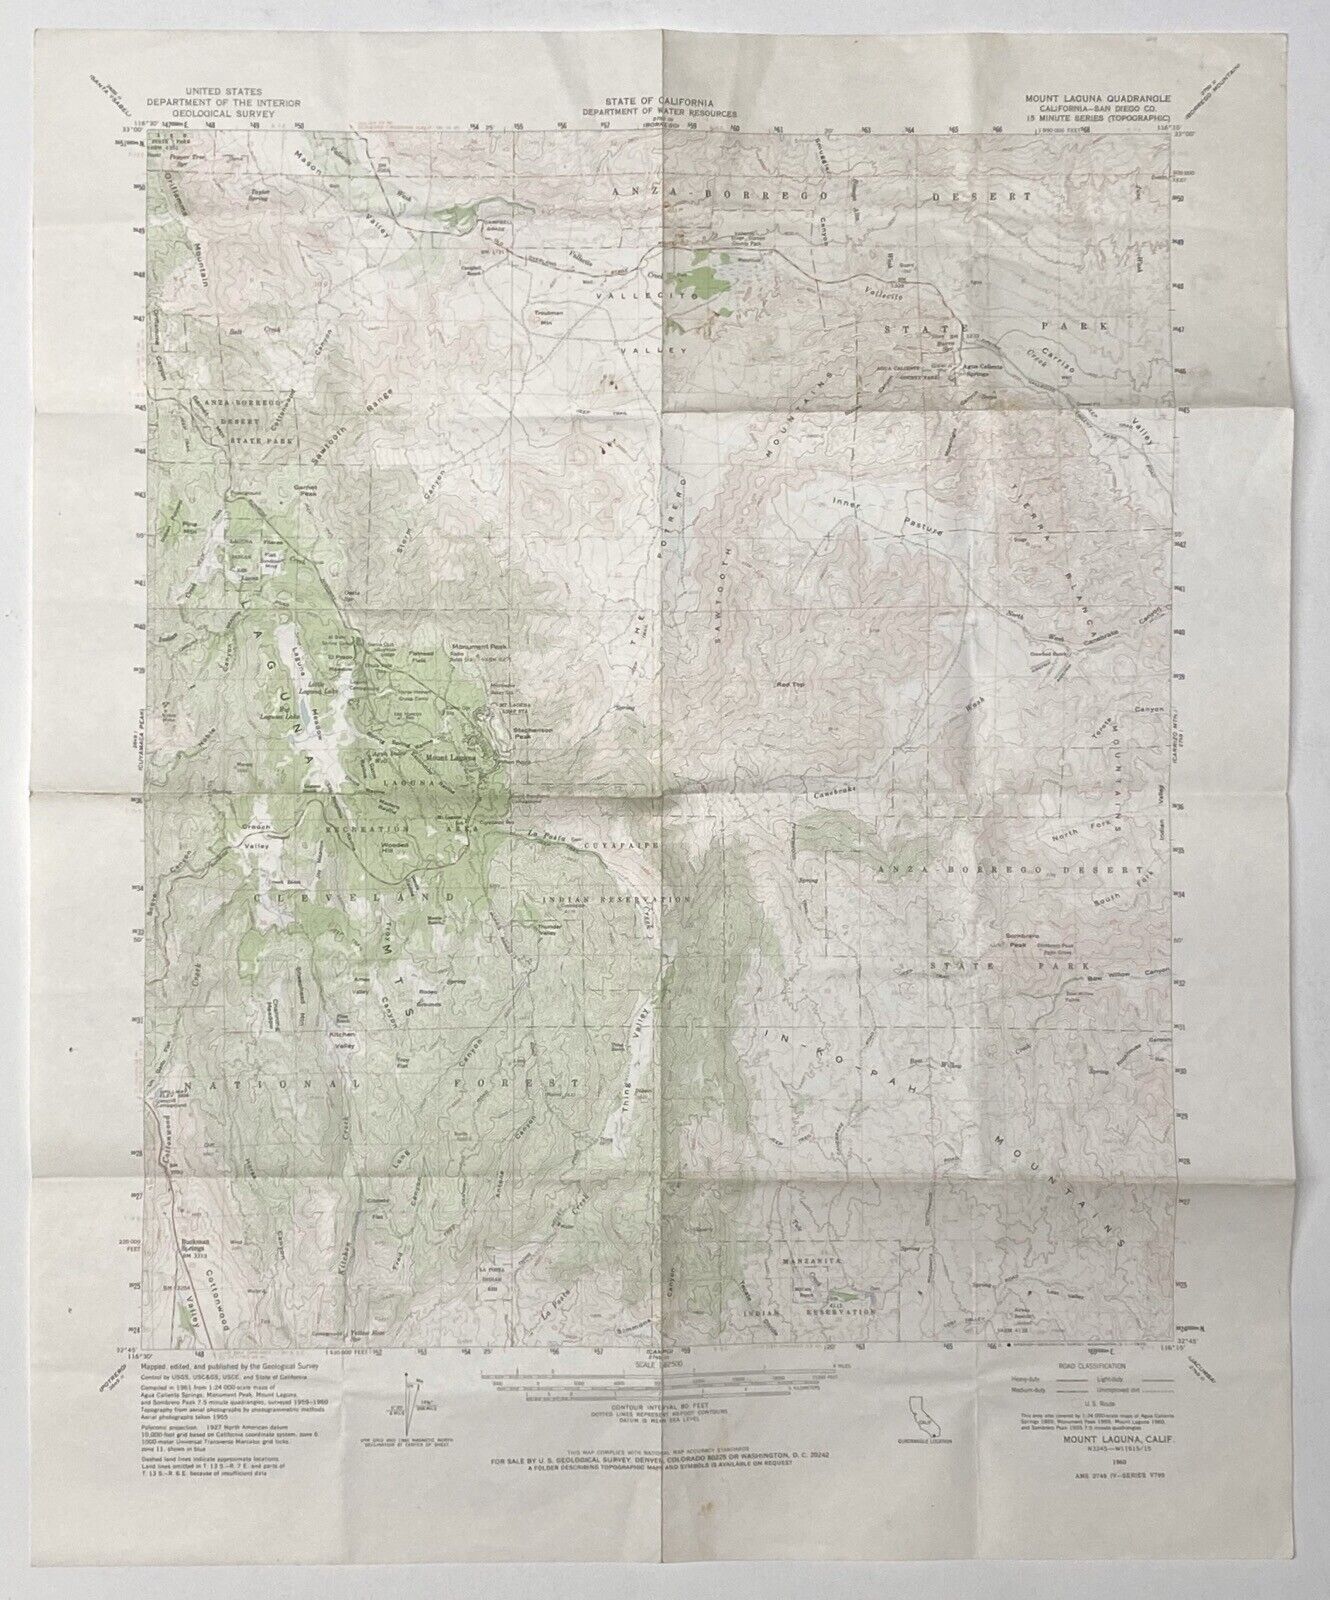 Mount Laguna Quadrangle - San Diego California • 1960 Geological Topographic Map